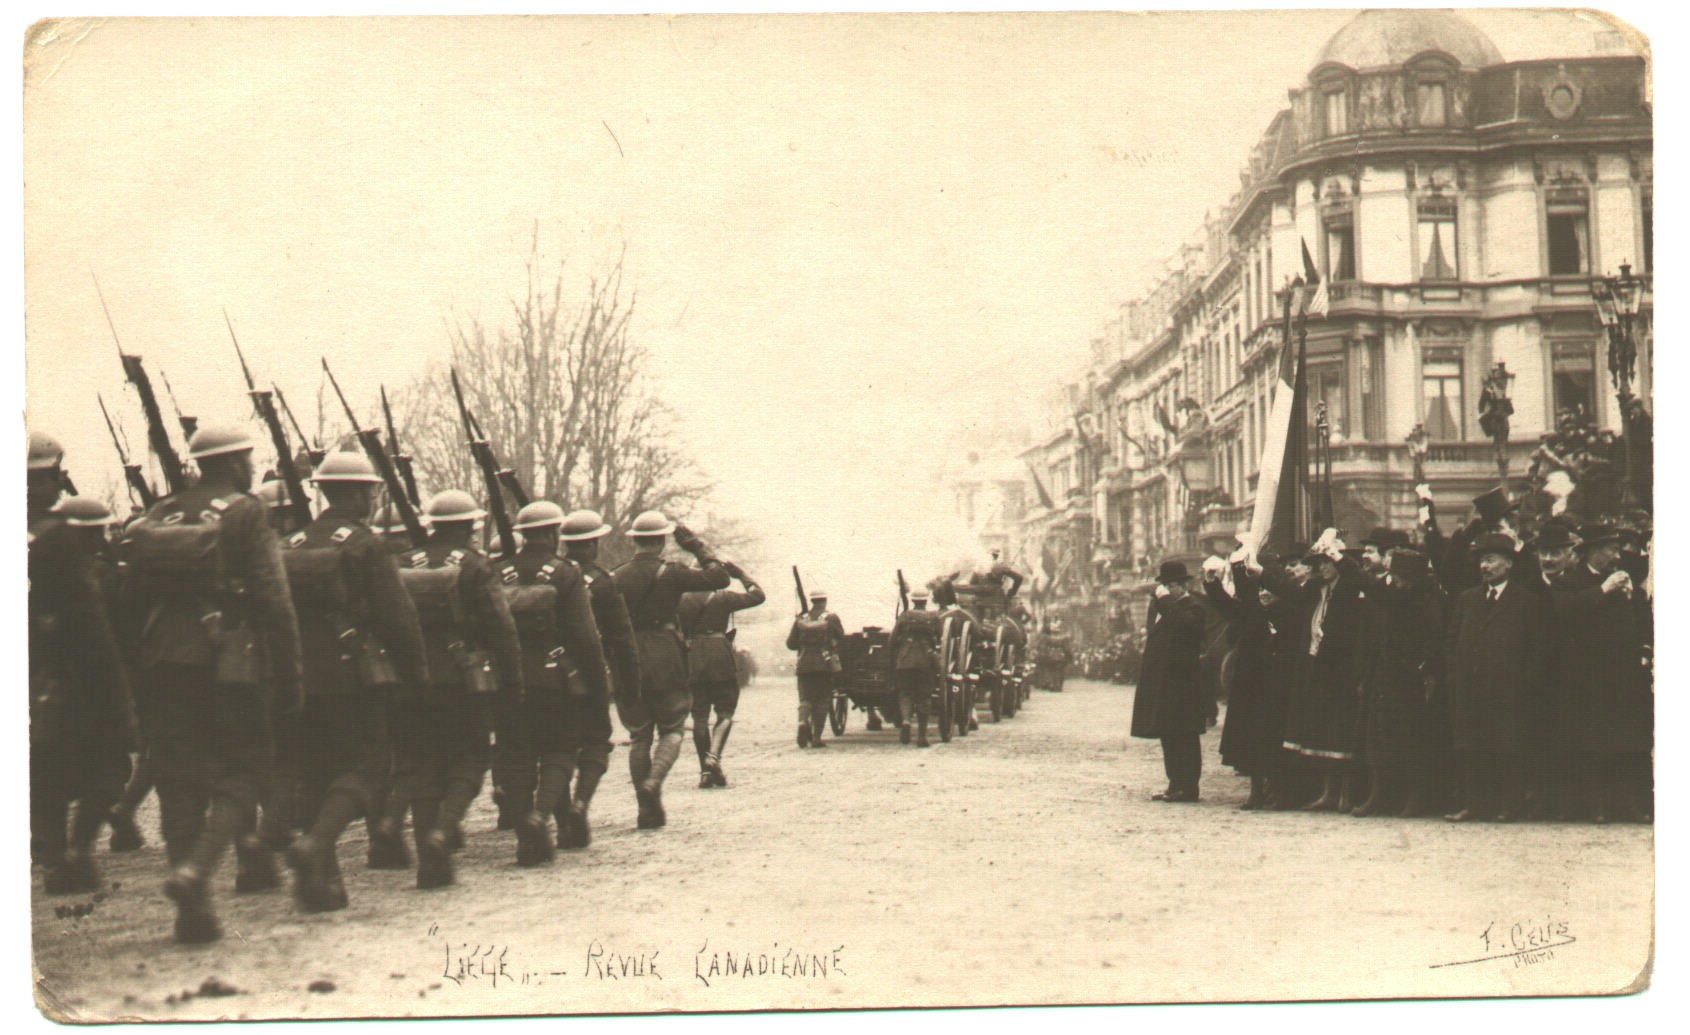 The 19th Battalion marching through Liège, Belgium